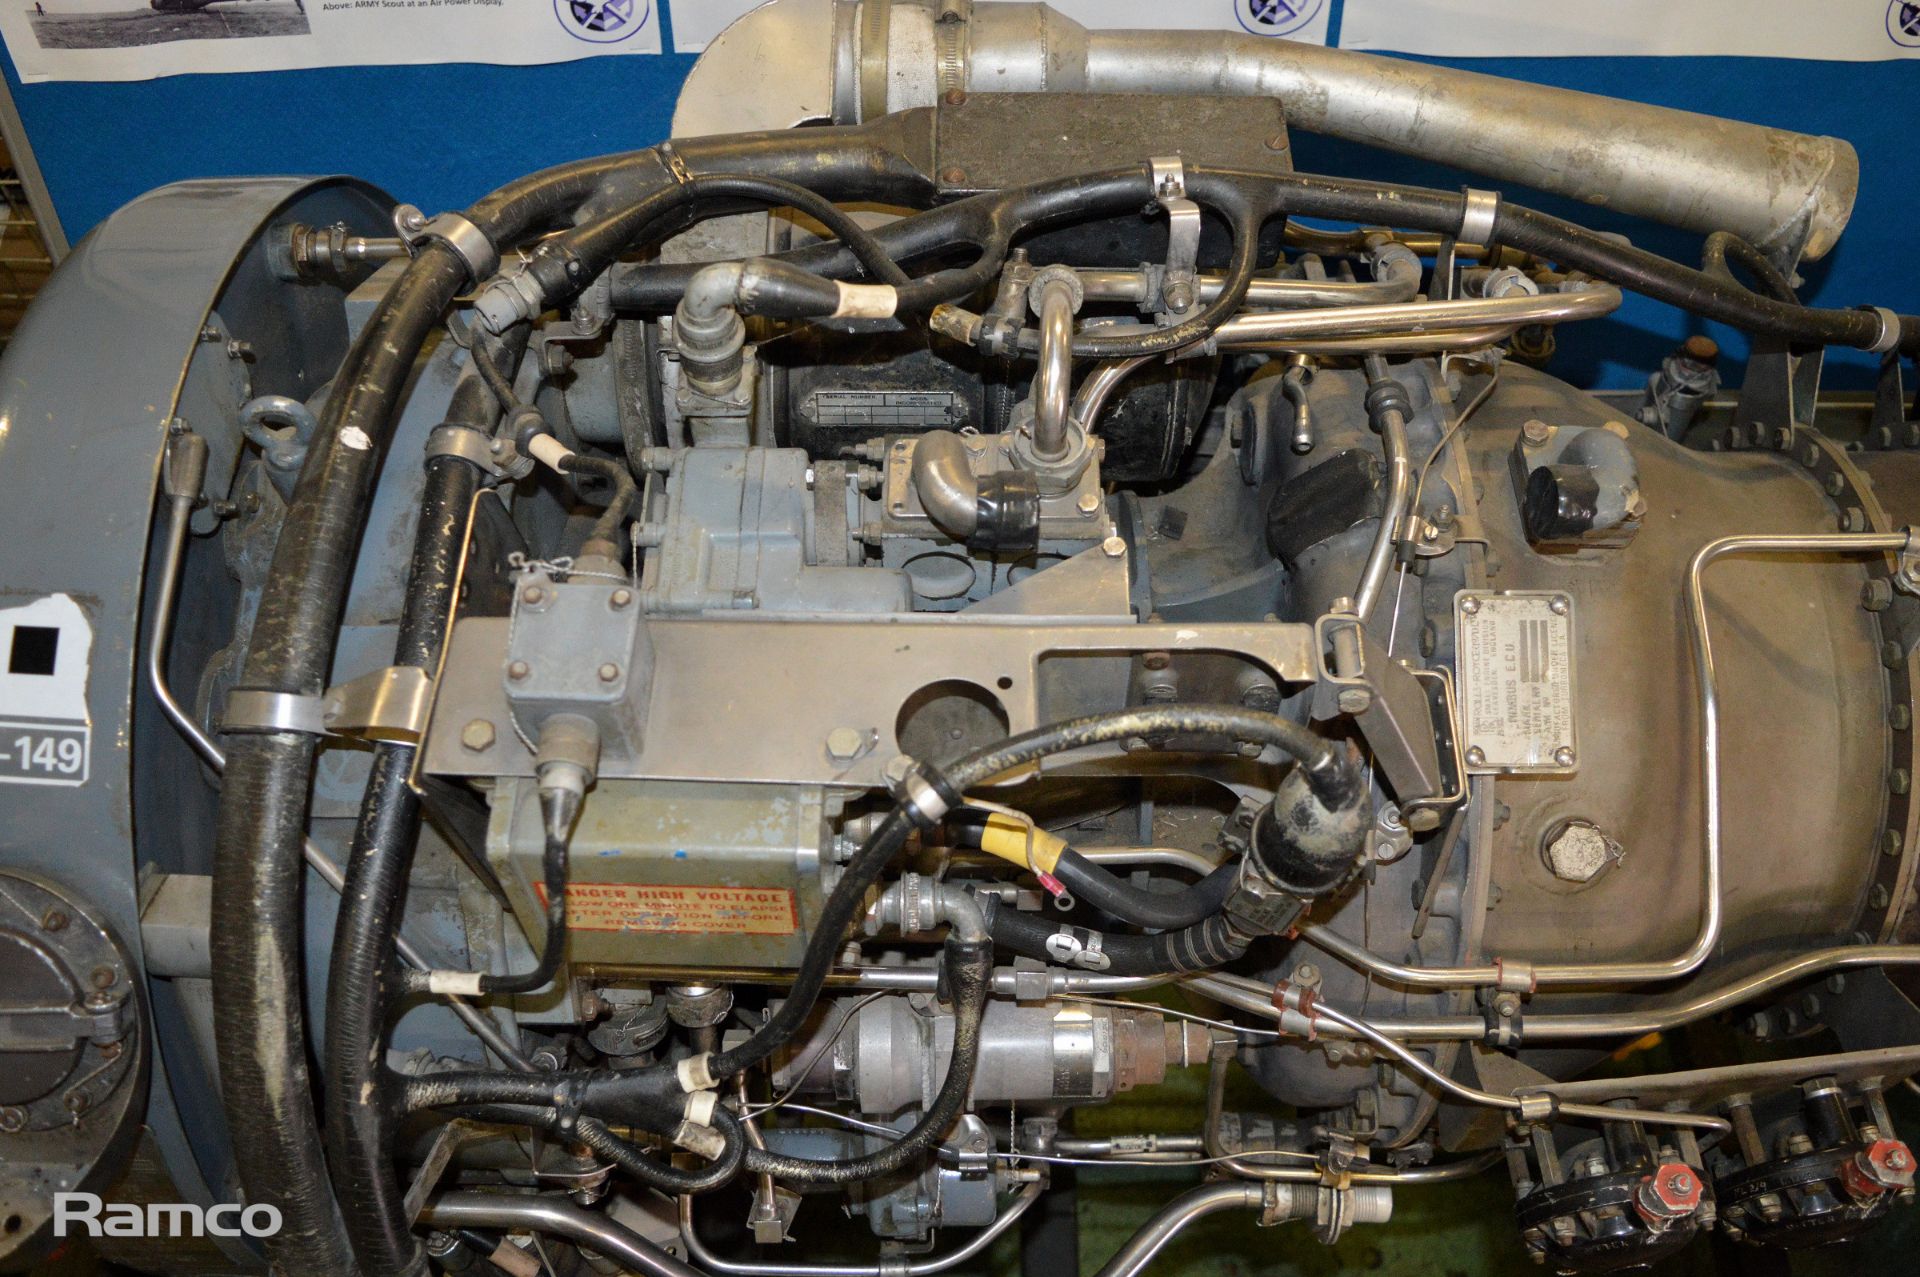 Rolls Royce Nimbus 105 Aero Jet Engine - Nimbus ECU - mark 1050 - serial 15255 - Image 10 of 15